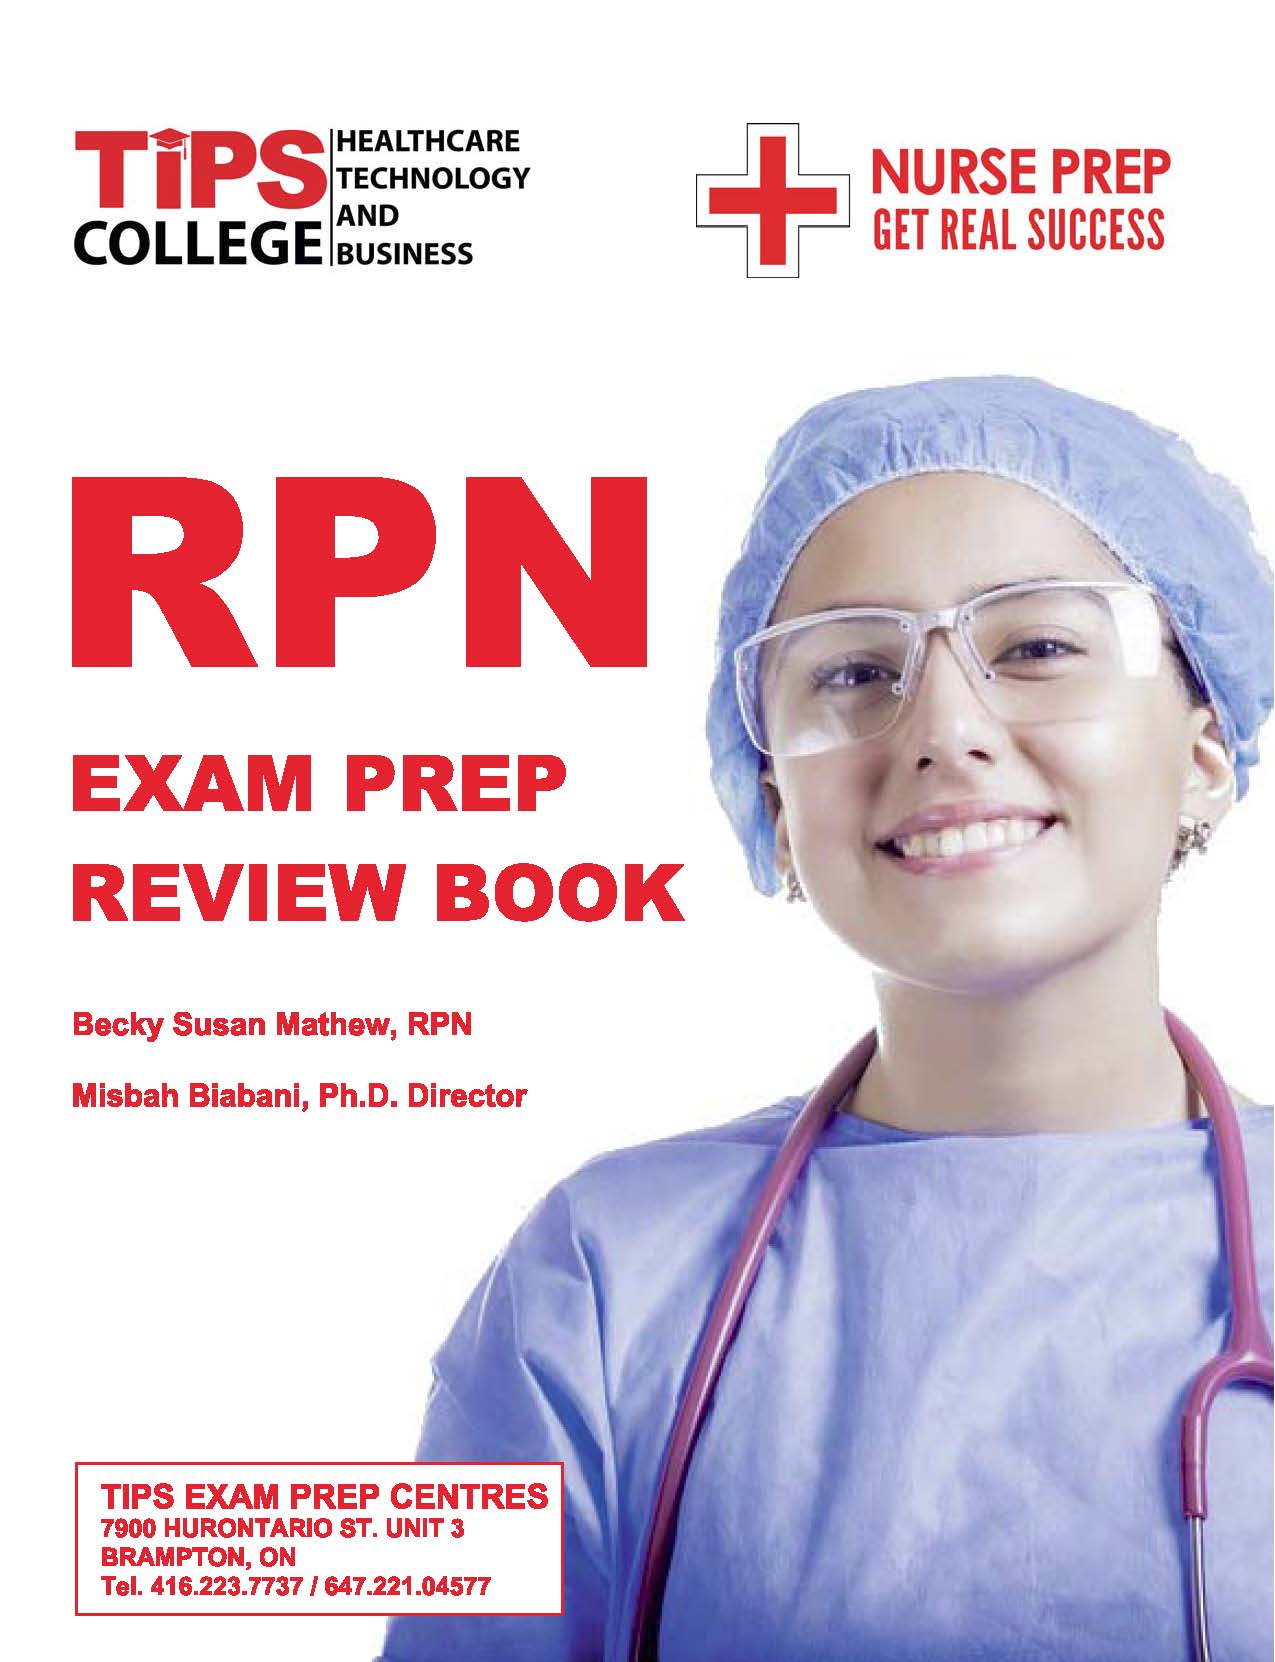 RPN Exam Review & Guide - Dr. Misbah Biabani, Ph.D.